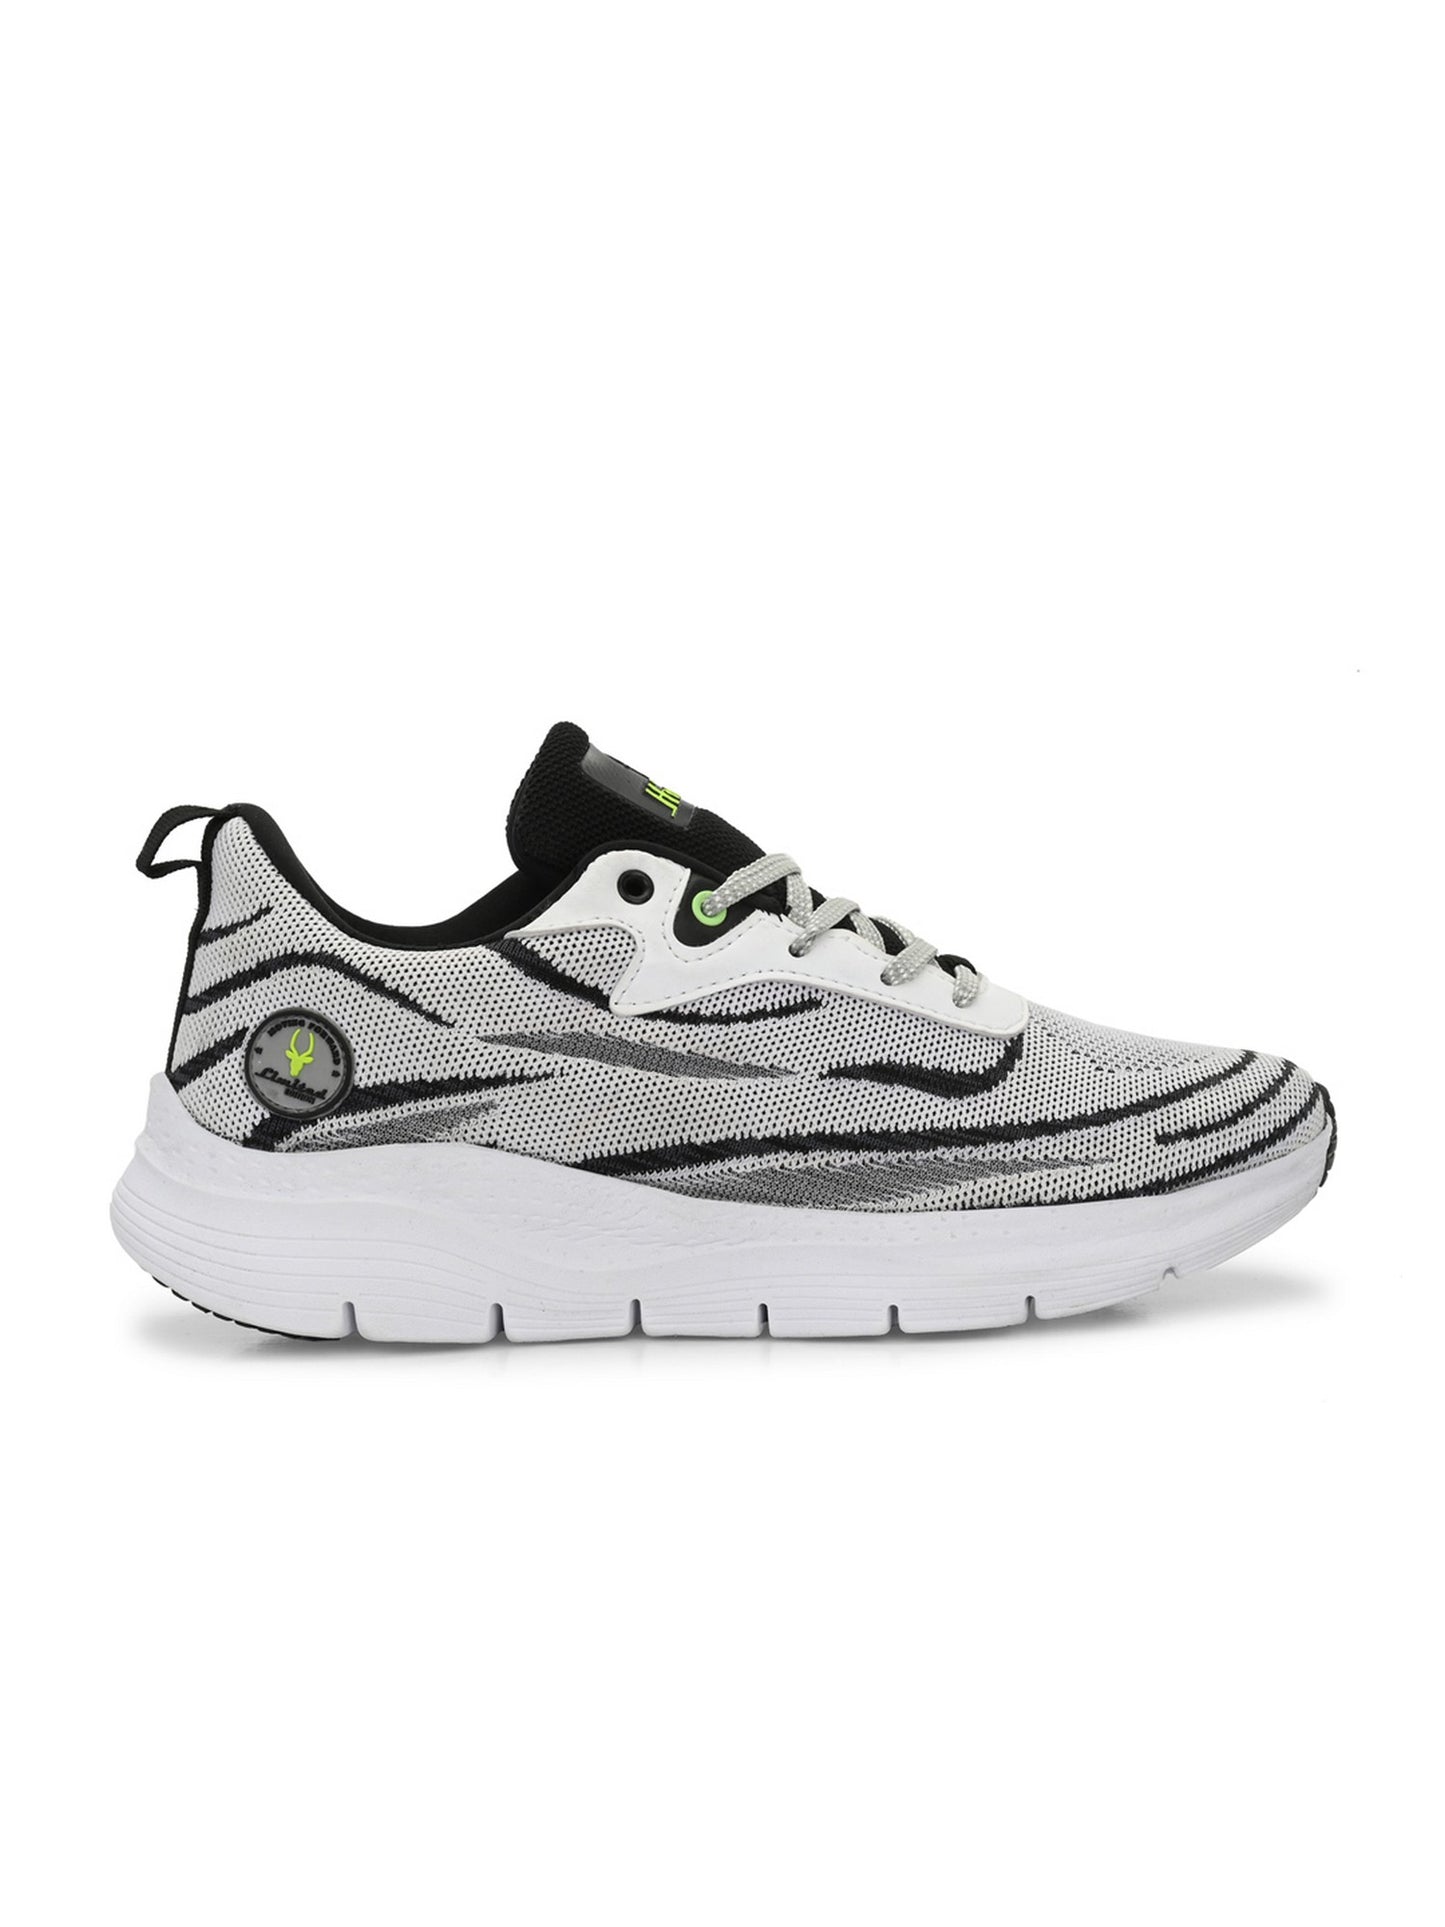 Hirolas® Men's  Cloudwalk Knitted Sports Running Sneakers Shoes. - Light Grey/Black HRLMP04GRB